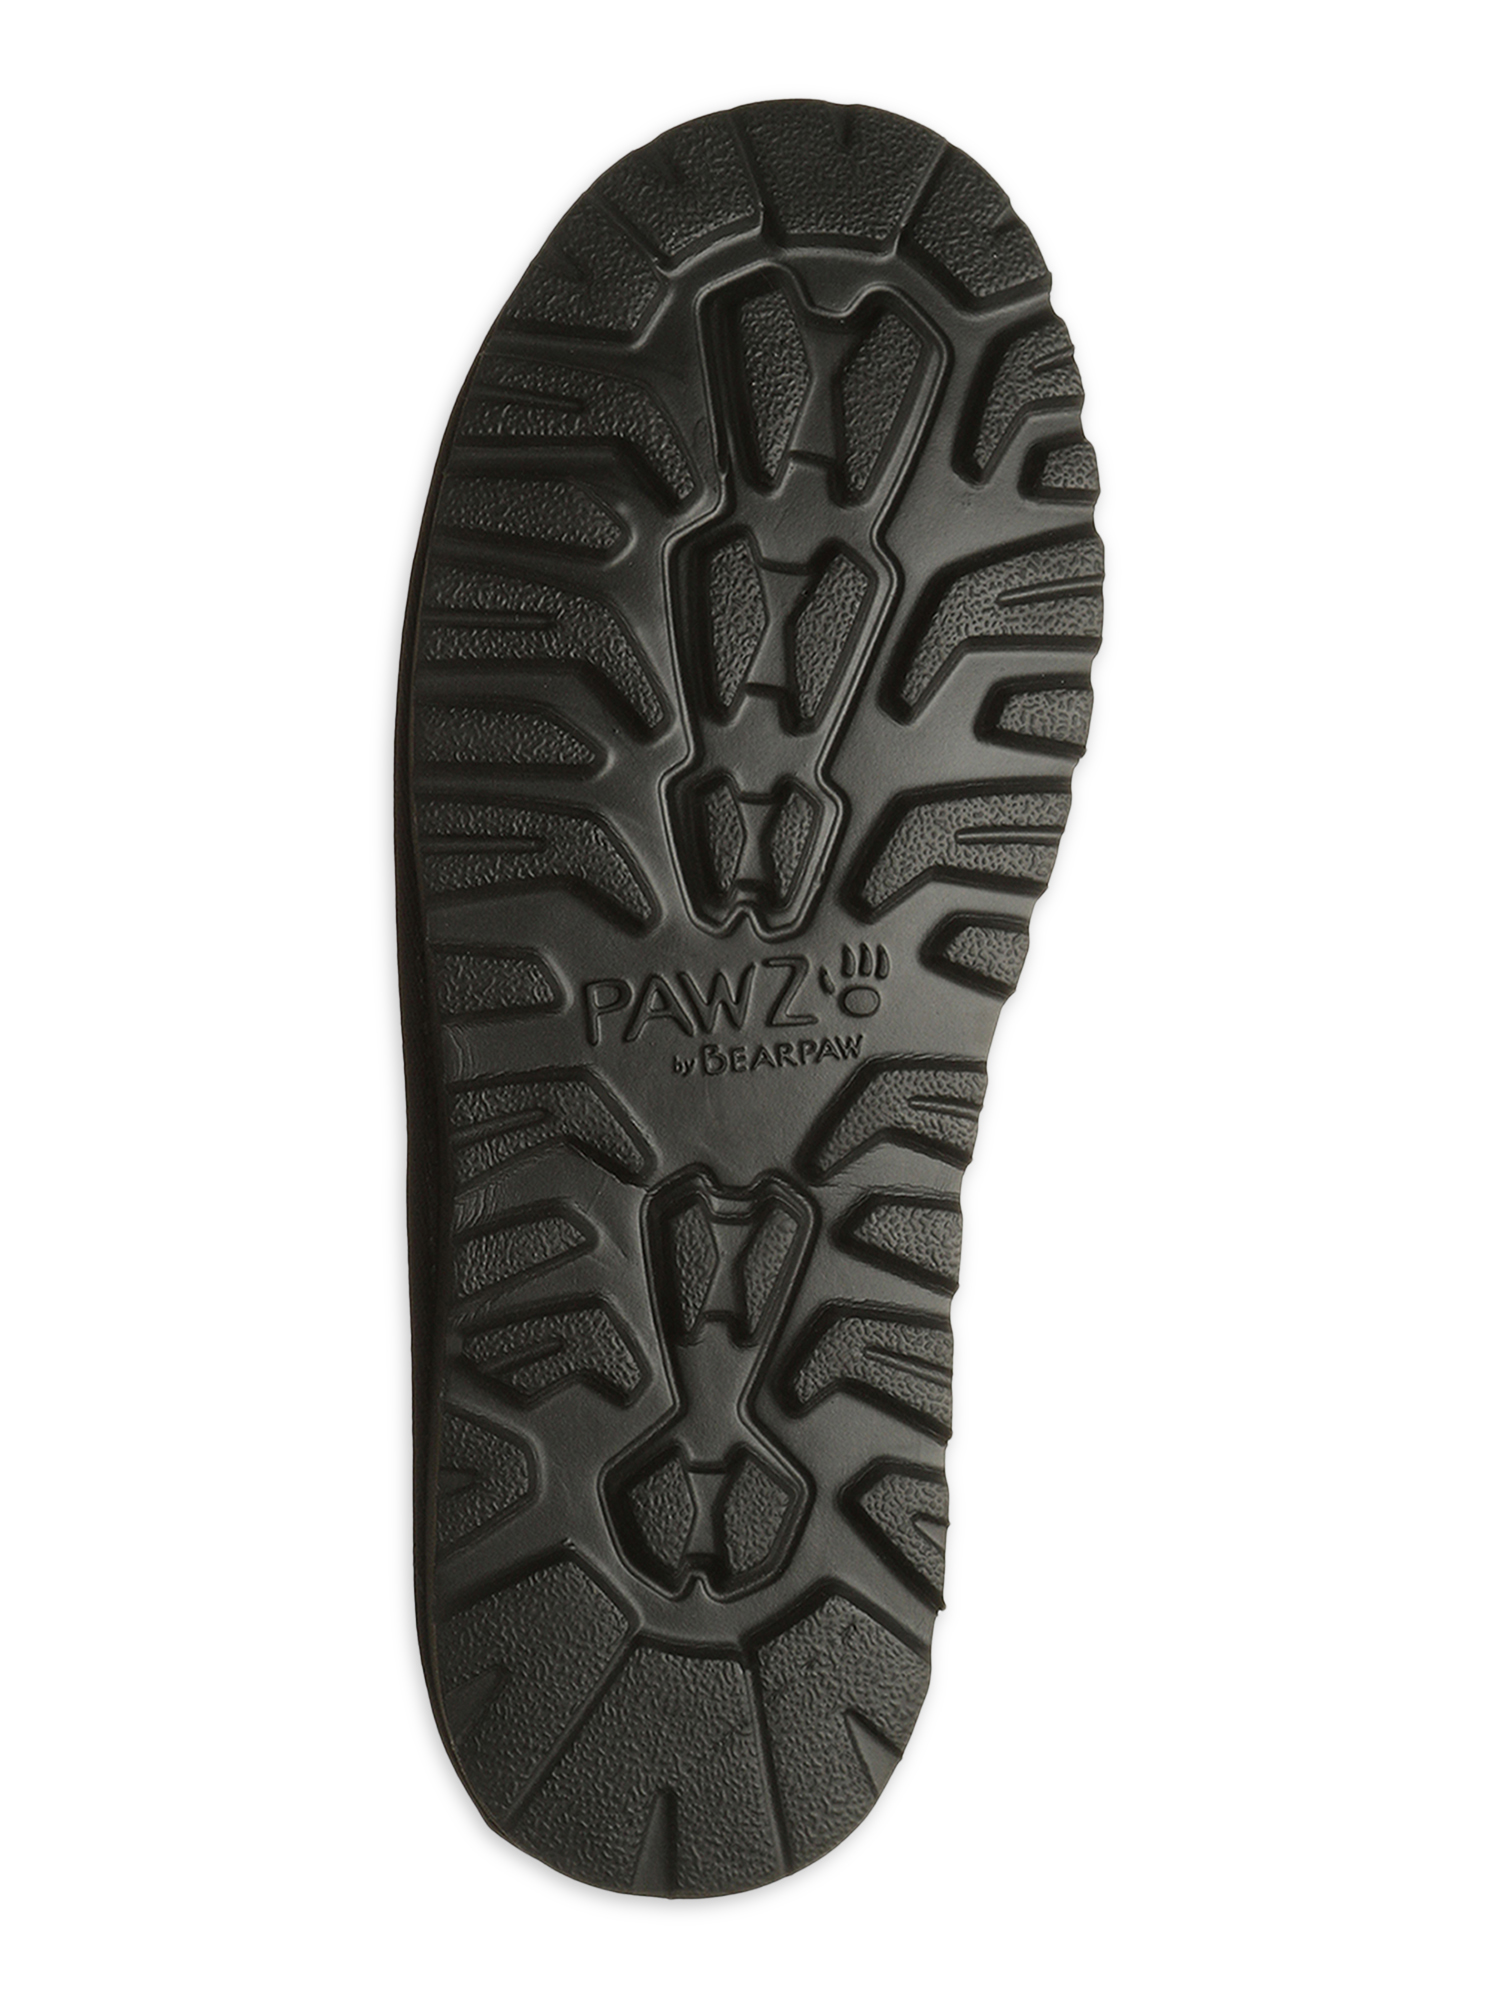 Pawz by Bearpaw Men's Genuine Suede Damian Bootie Slip-Ons - image 5 of 6